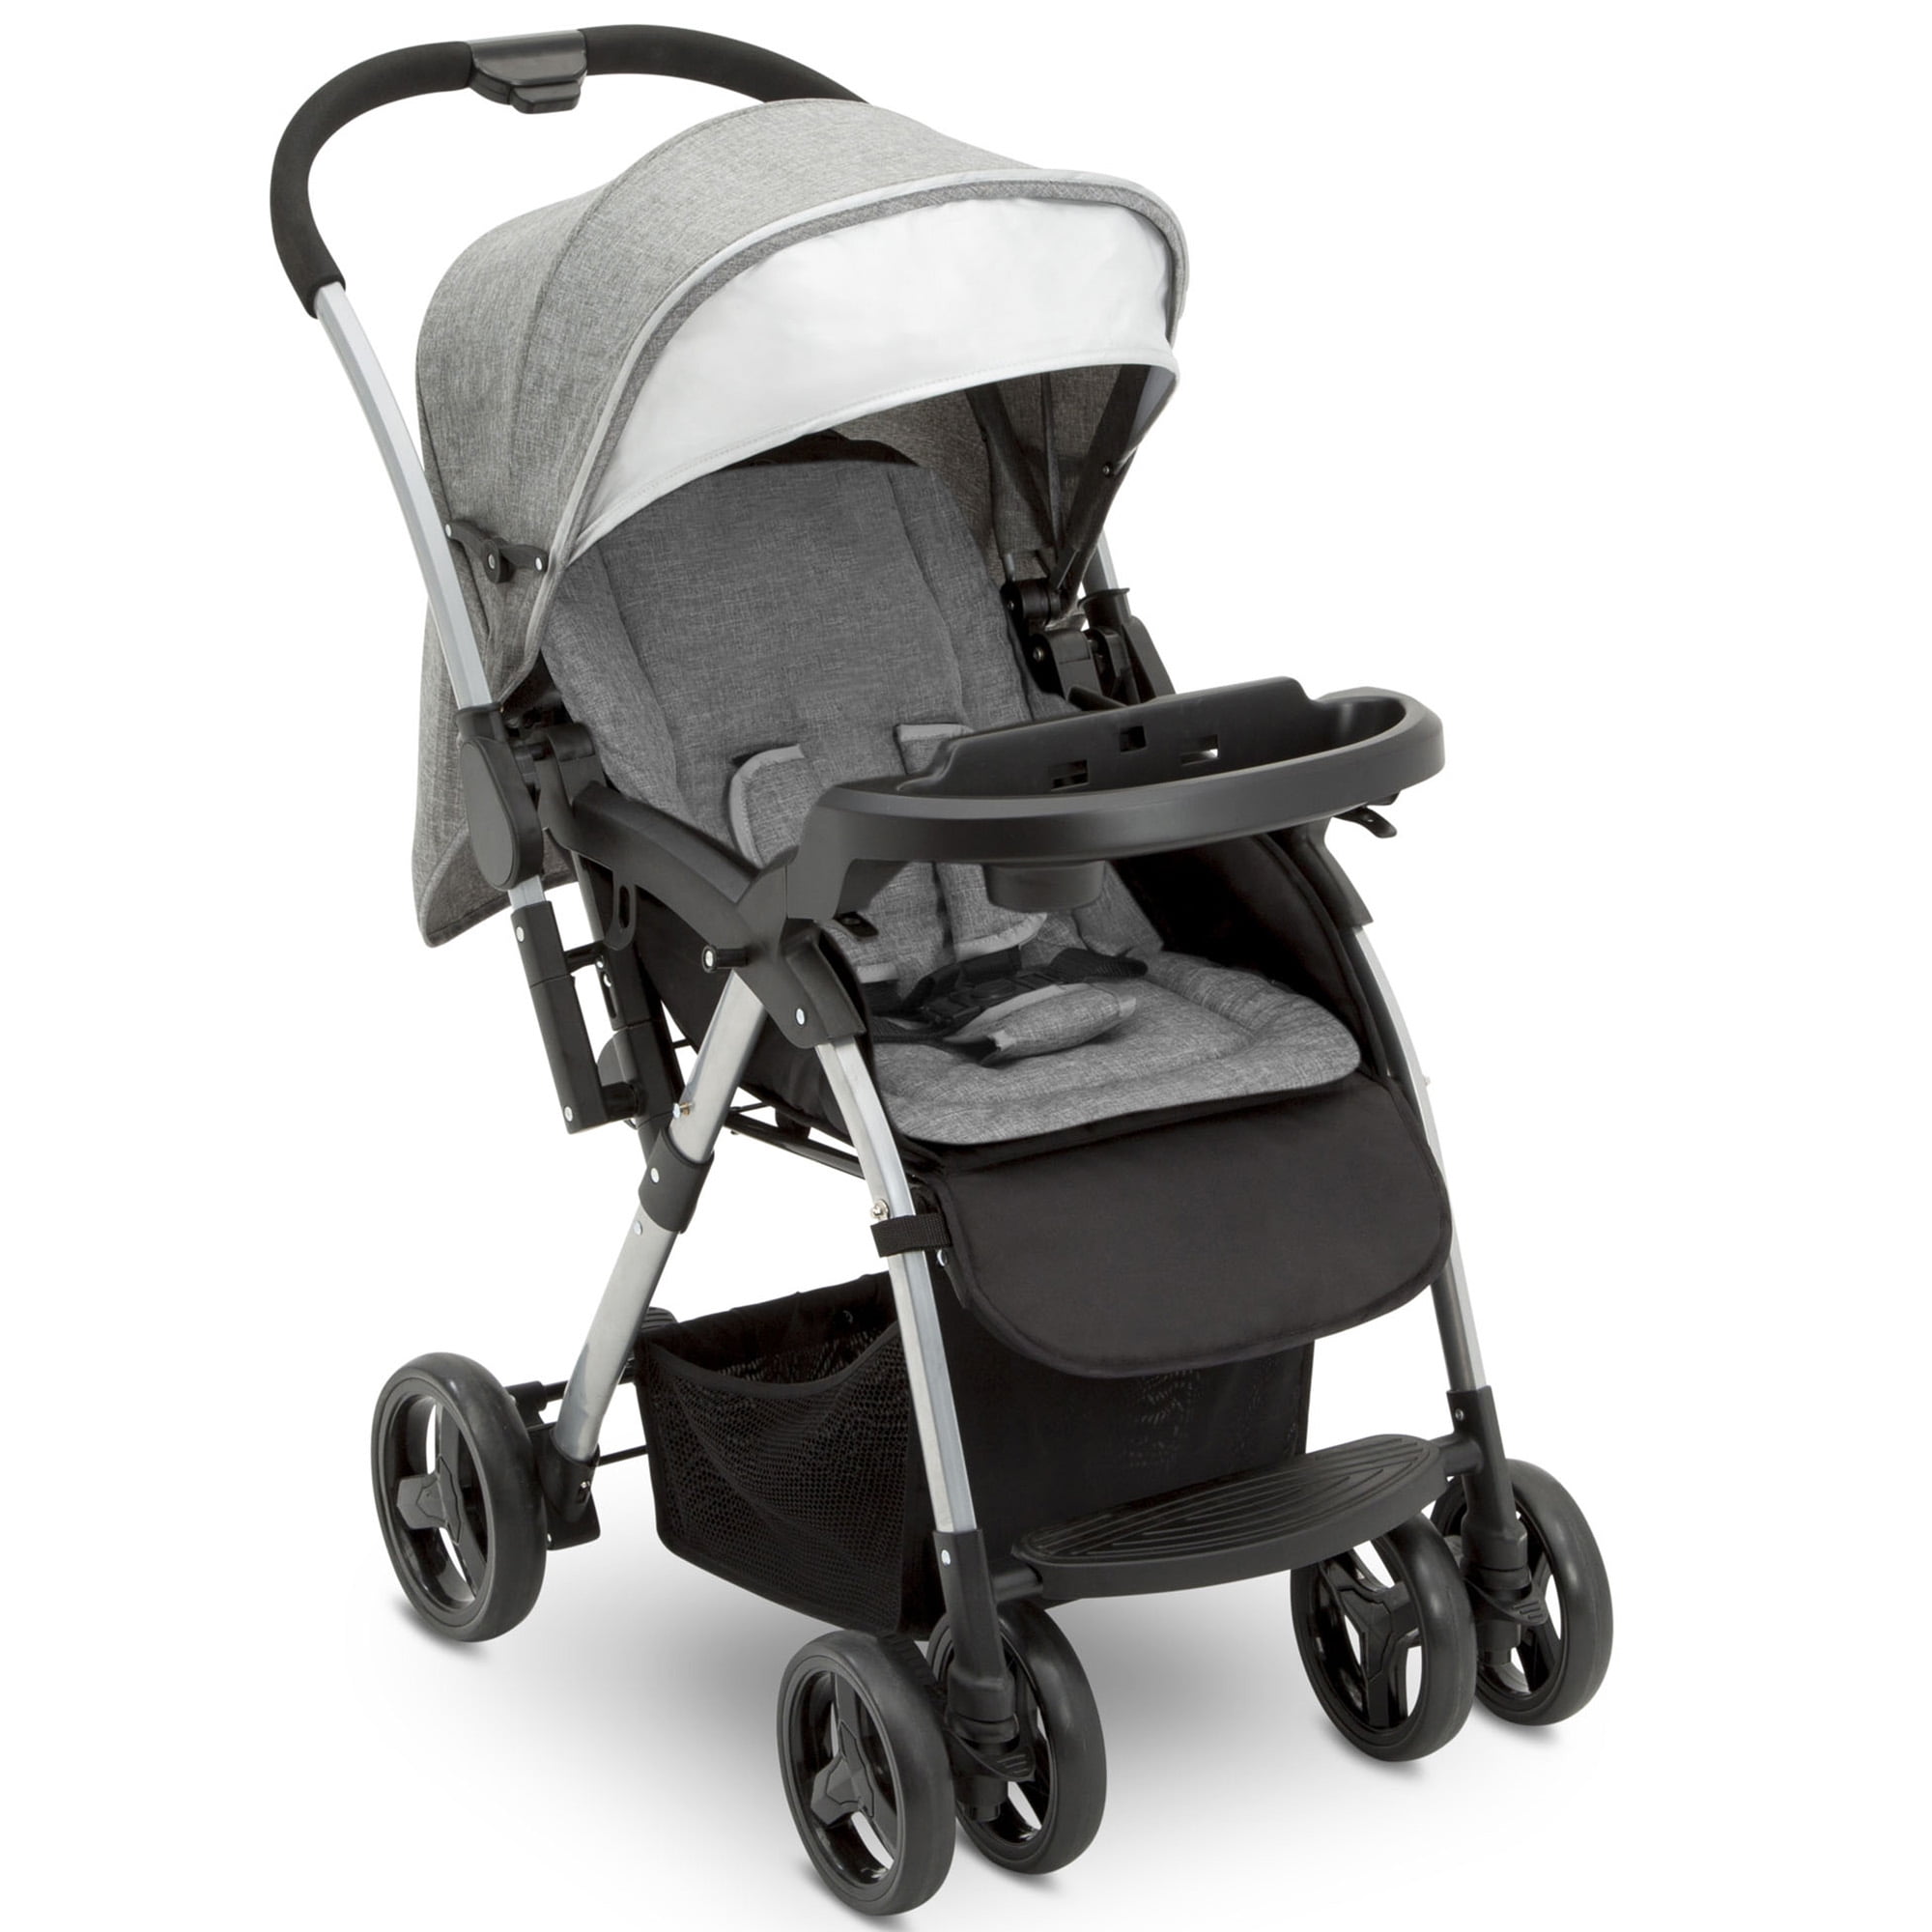 costway 2 in1 foldable baby stroller kids travel newborn infant buggy pushchair black